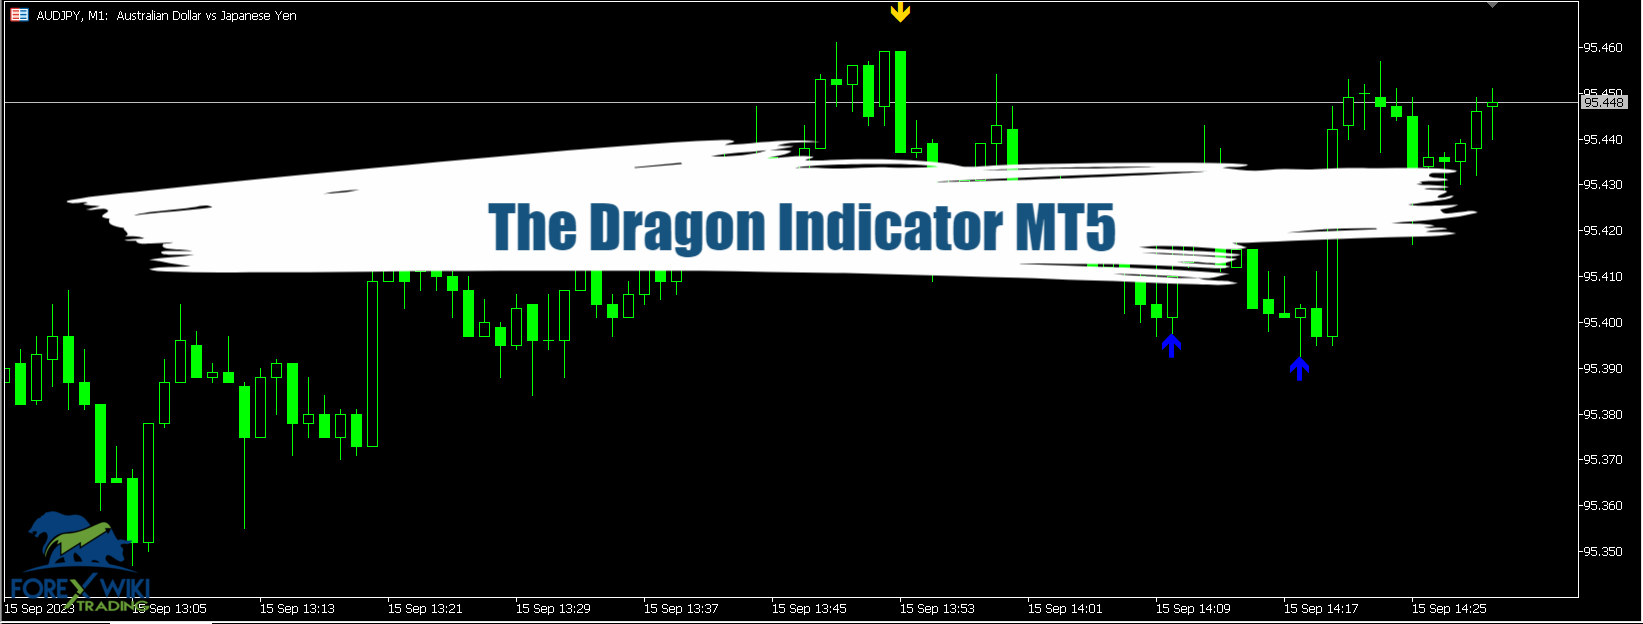 The Dragon Indicator MT5 - Free Download 56